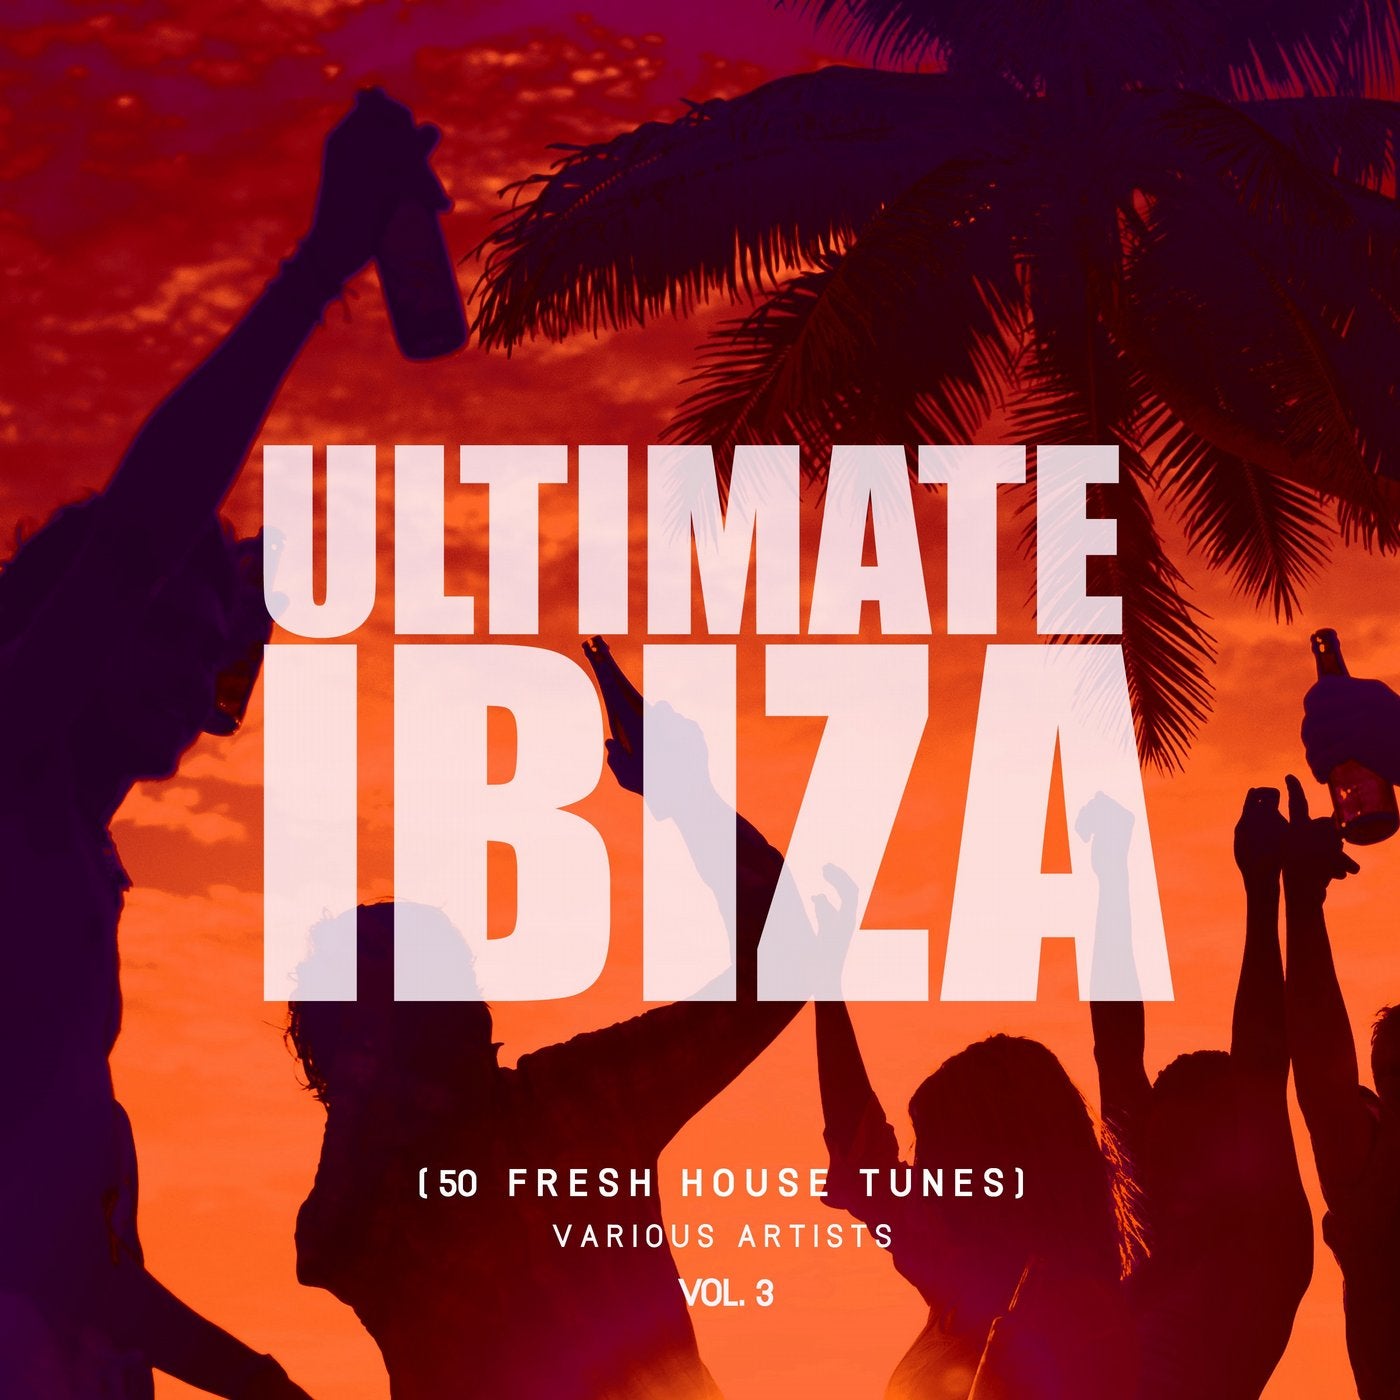 Ultimate Ibiza, Vol. 3 (50 Fresh House Tunes)